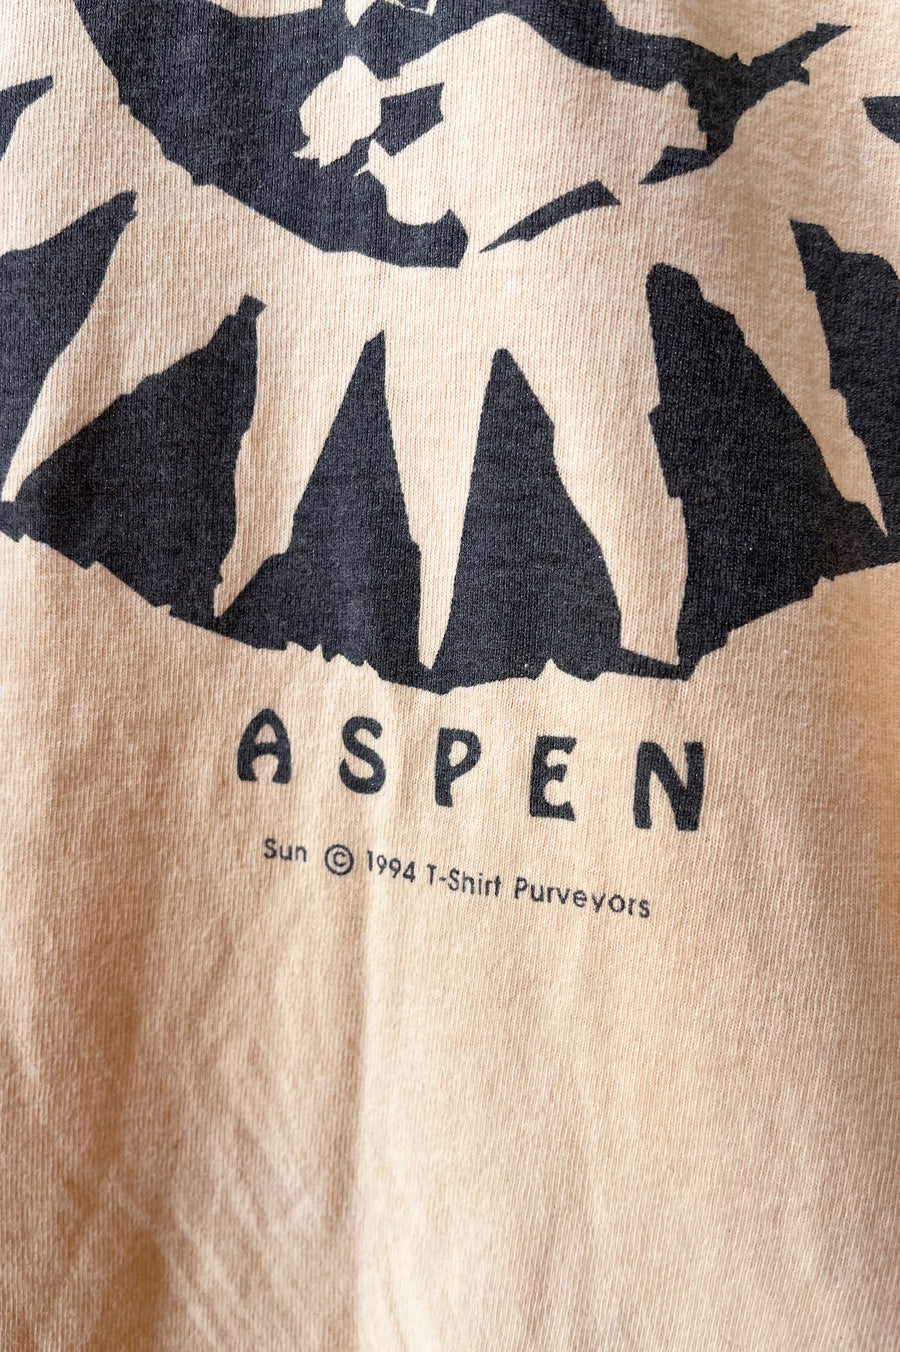 Aspen Sun Vintage T-Shirt